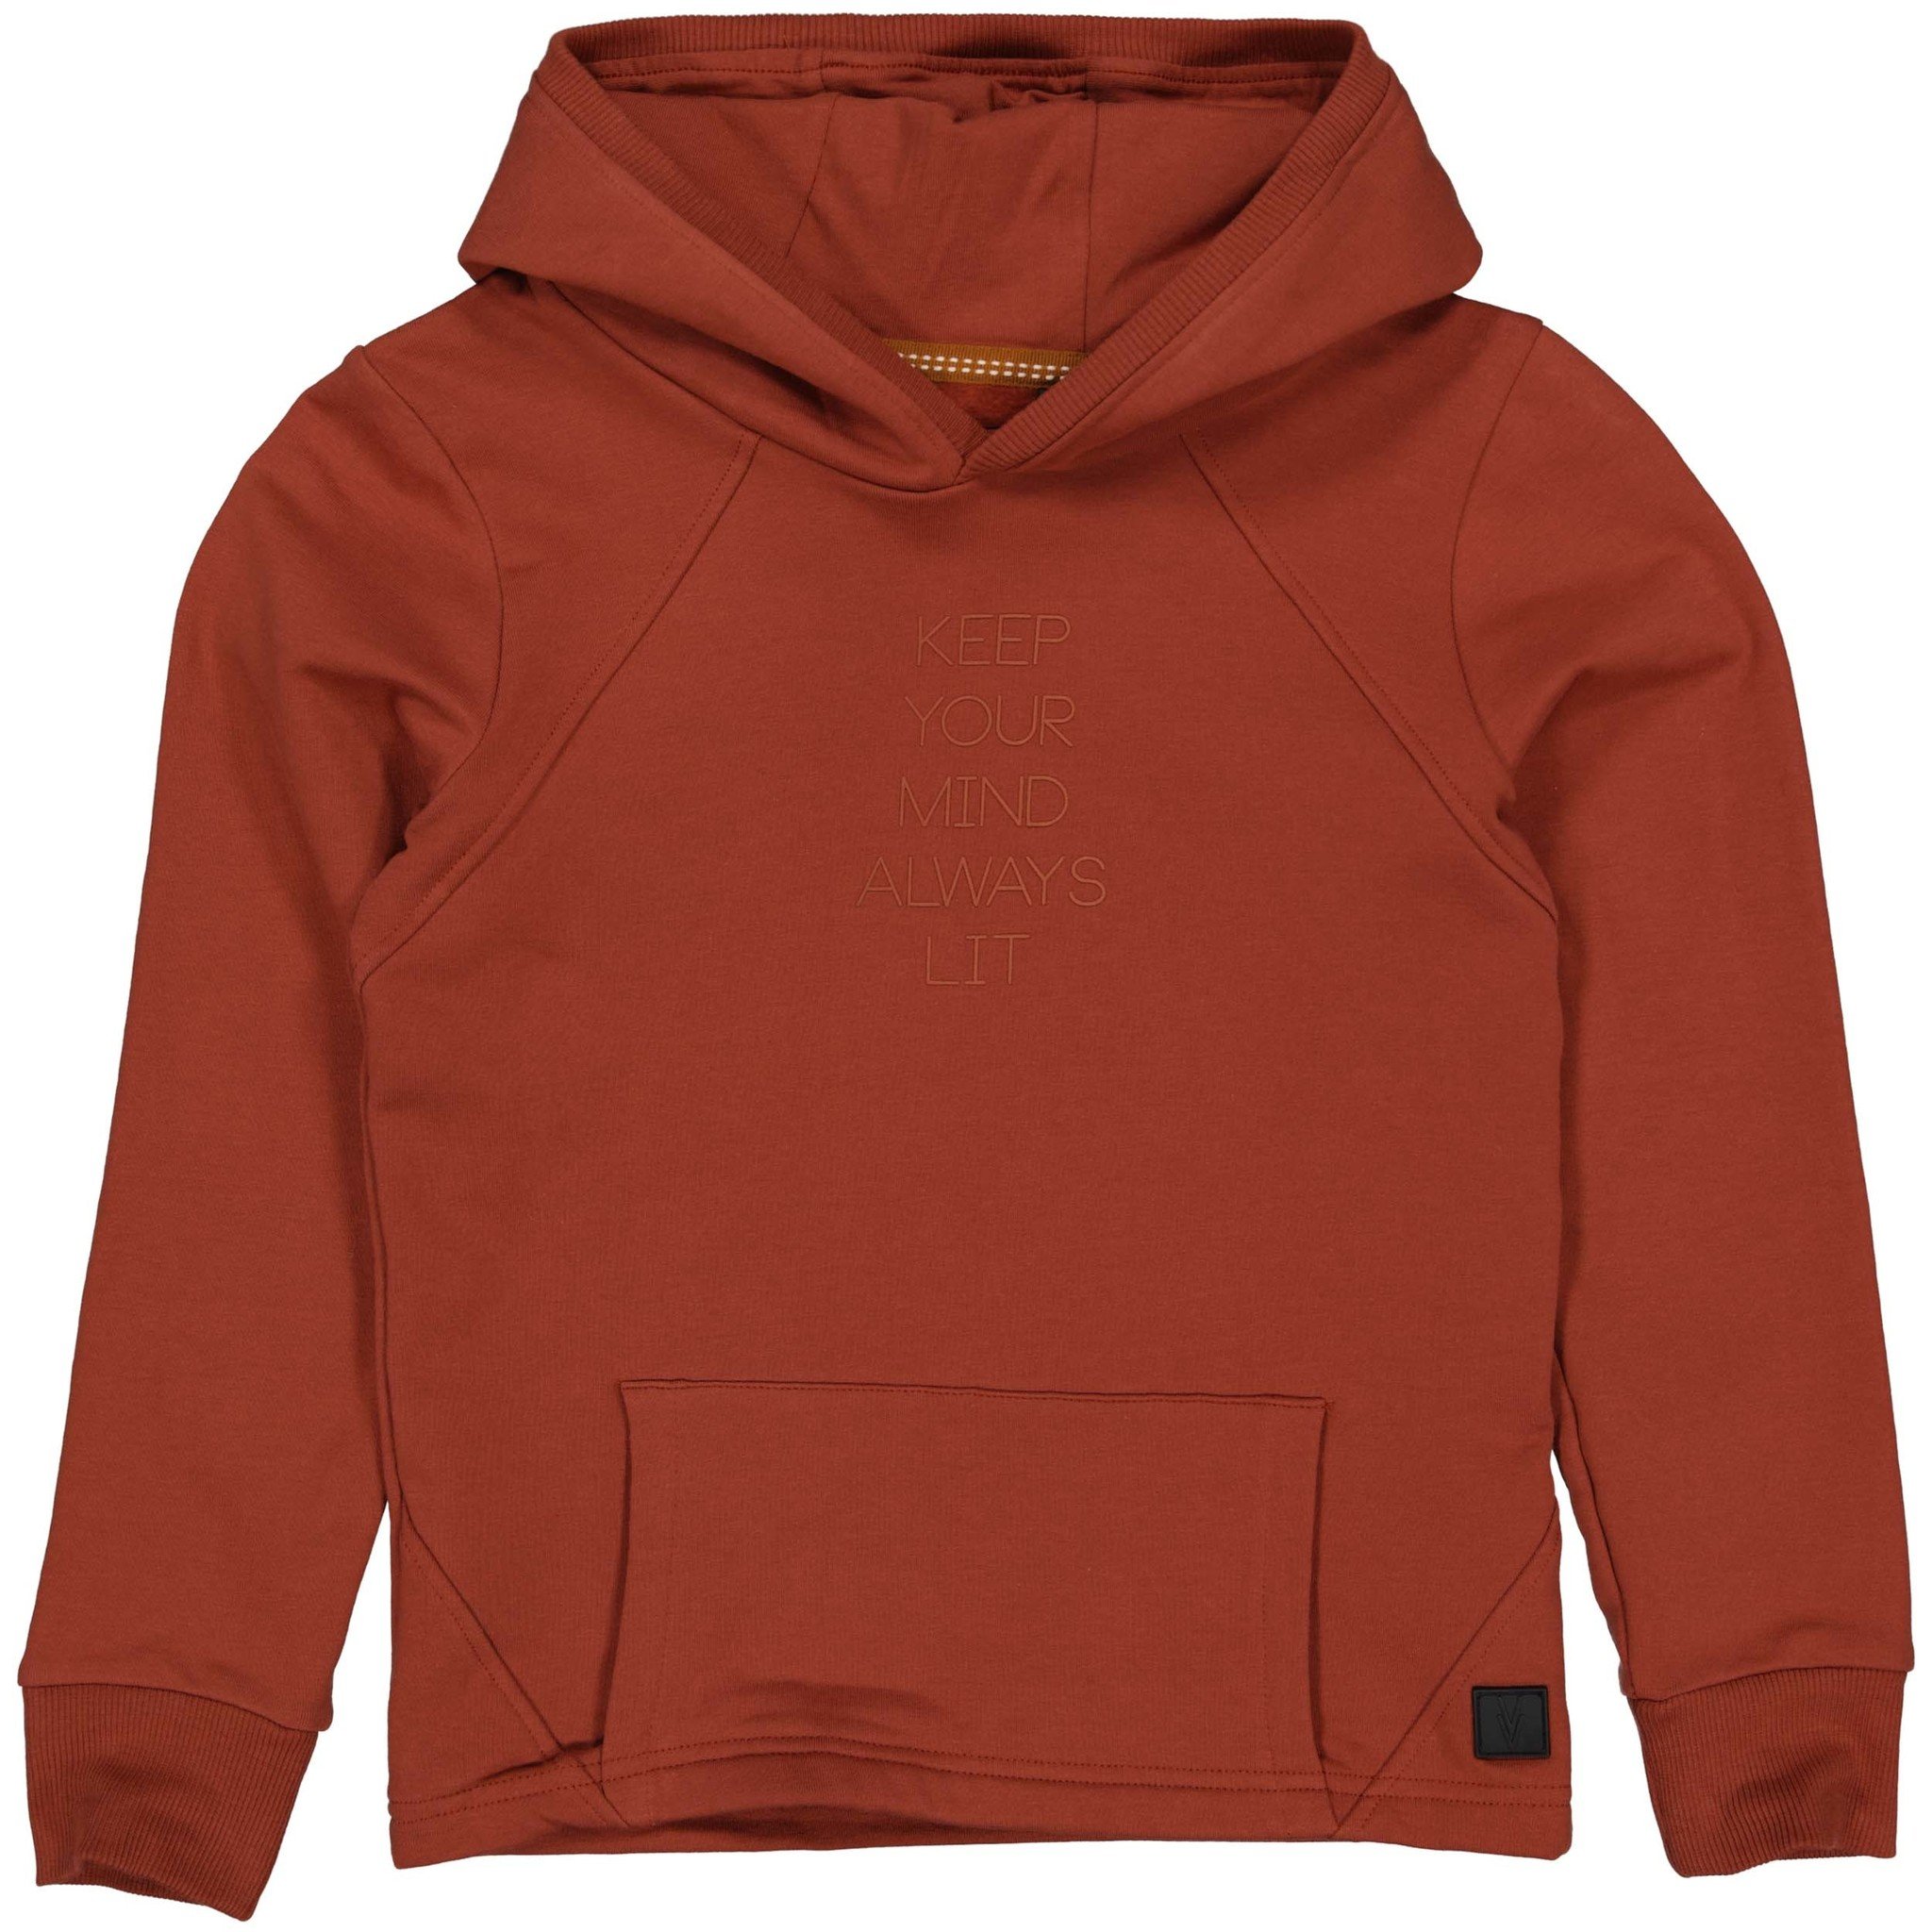 LEVV Jongens sweater - Arda - Rood roest